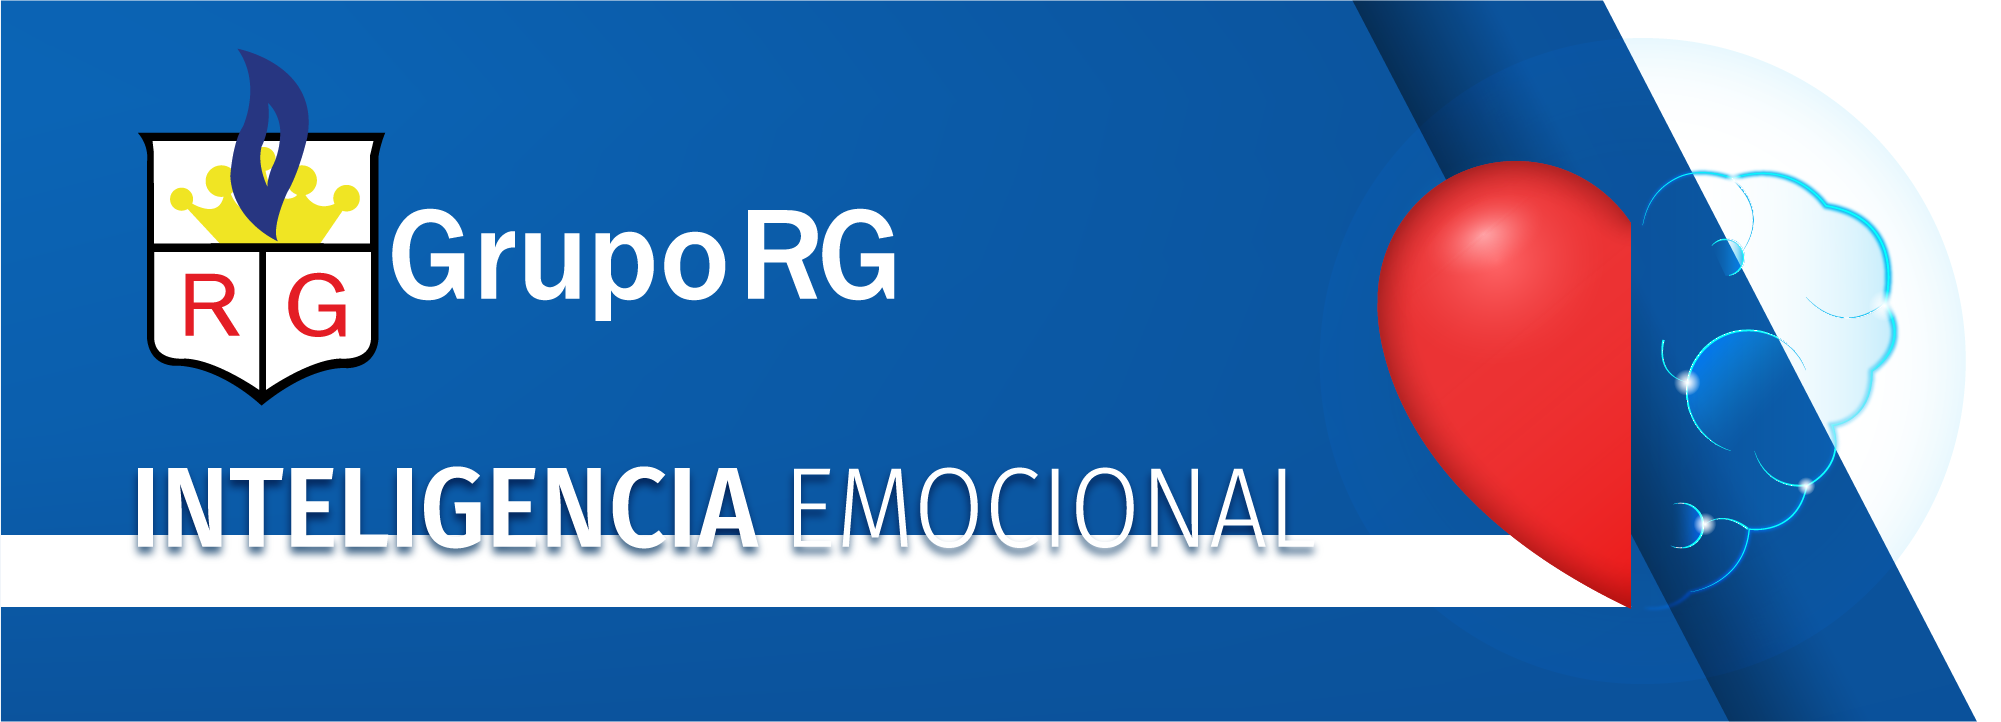 Inteligencia emocional-Grupo Regio Gas Grupo 2 RG-0004